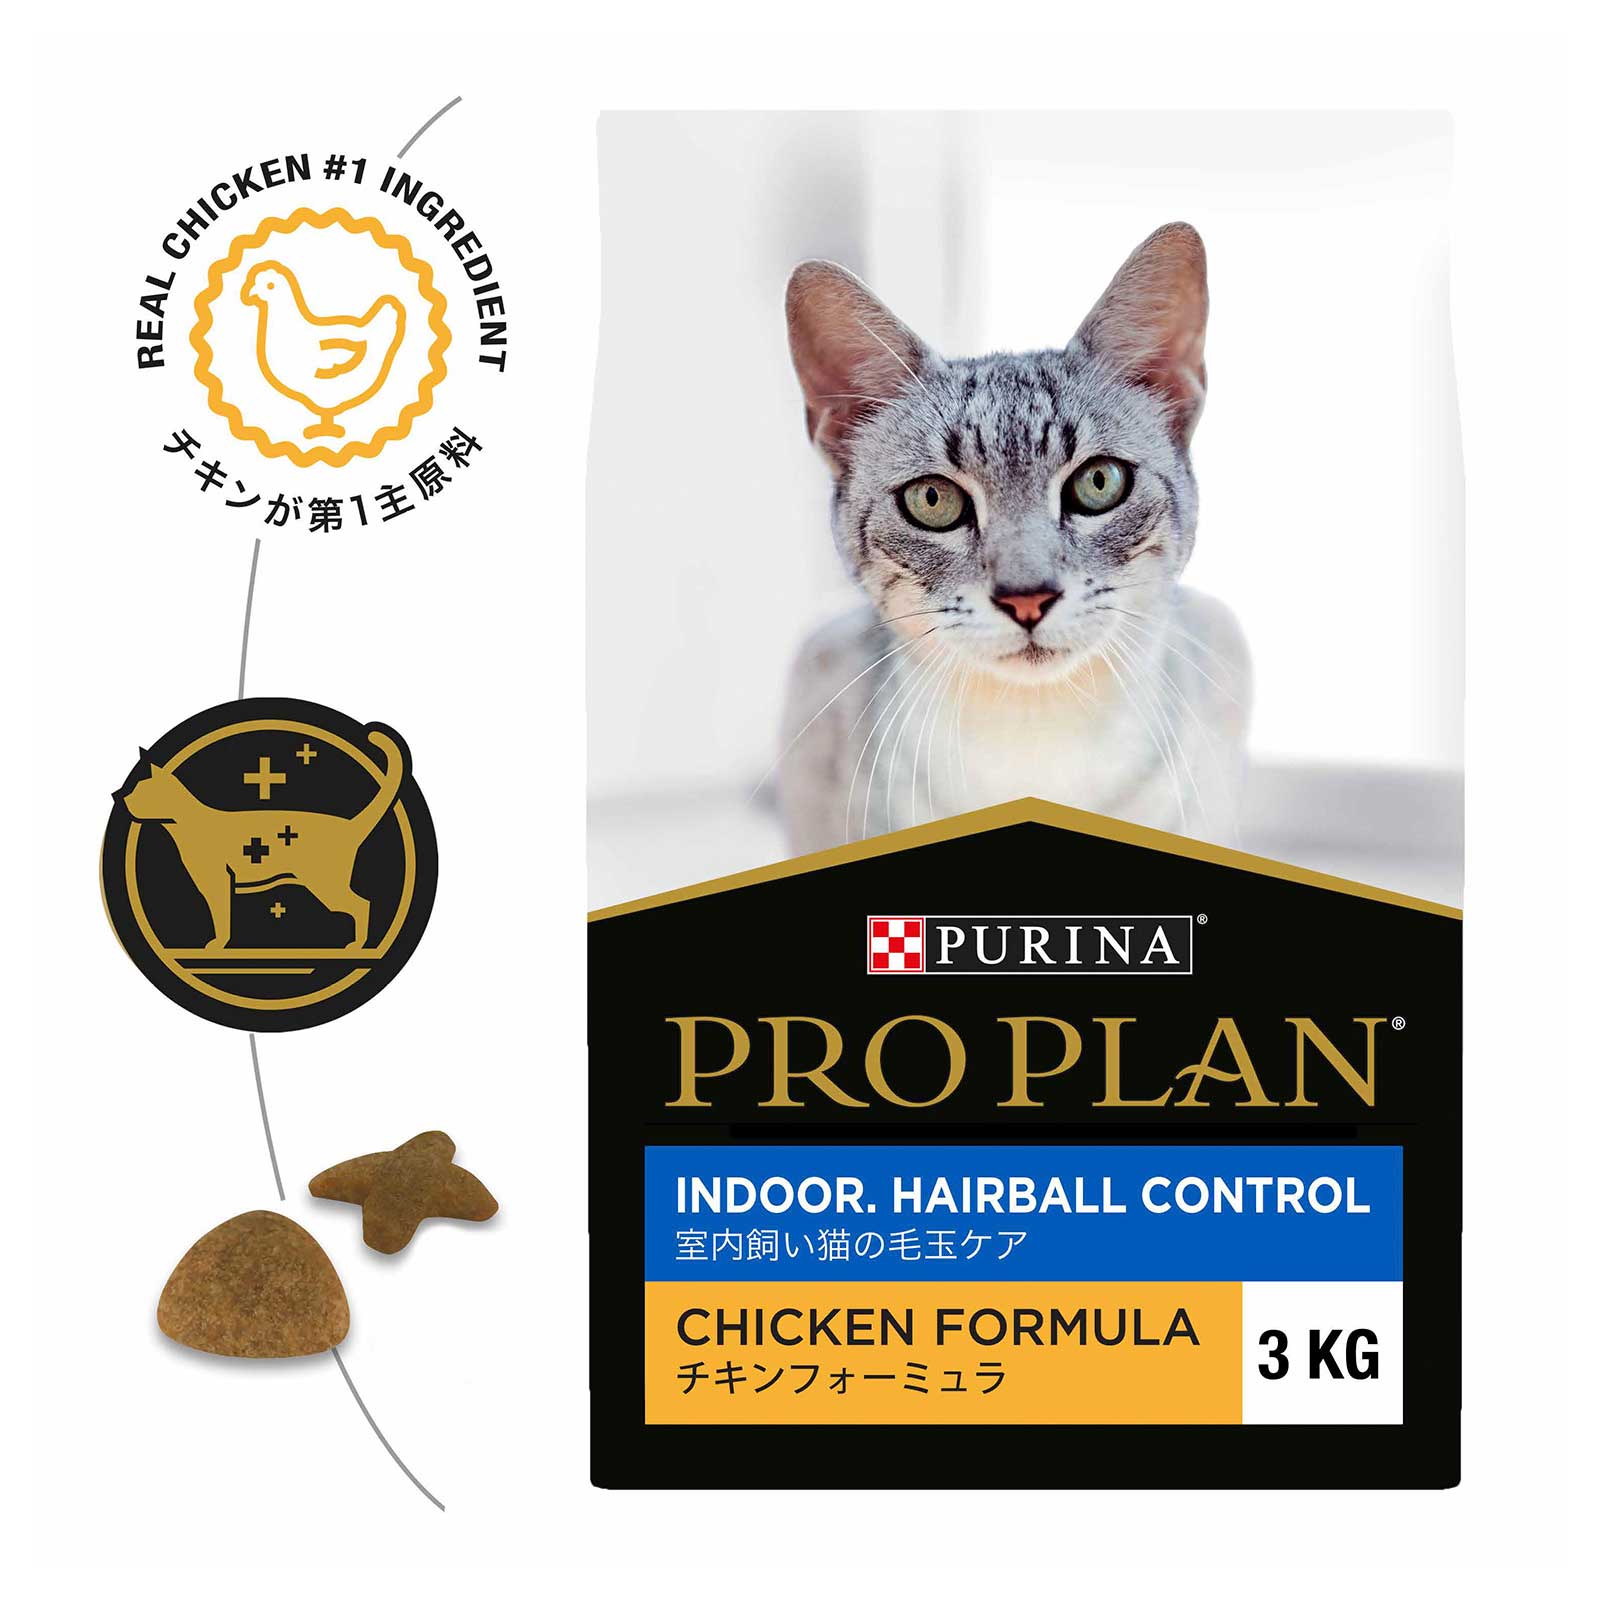 Pro Plan Cat Food Adult Indoor & Hairball Control